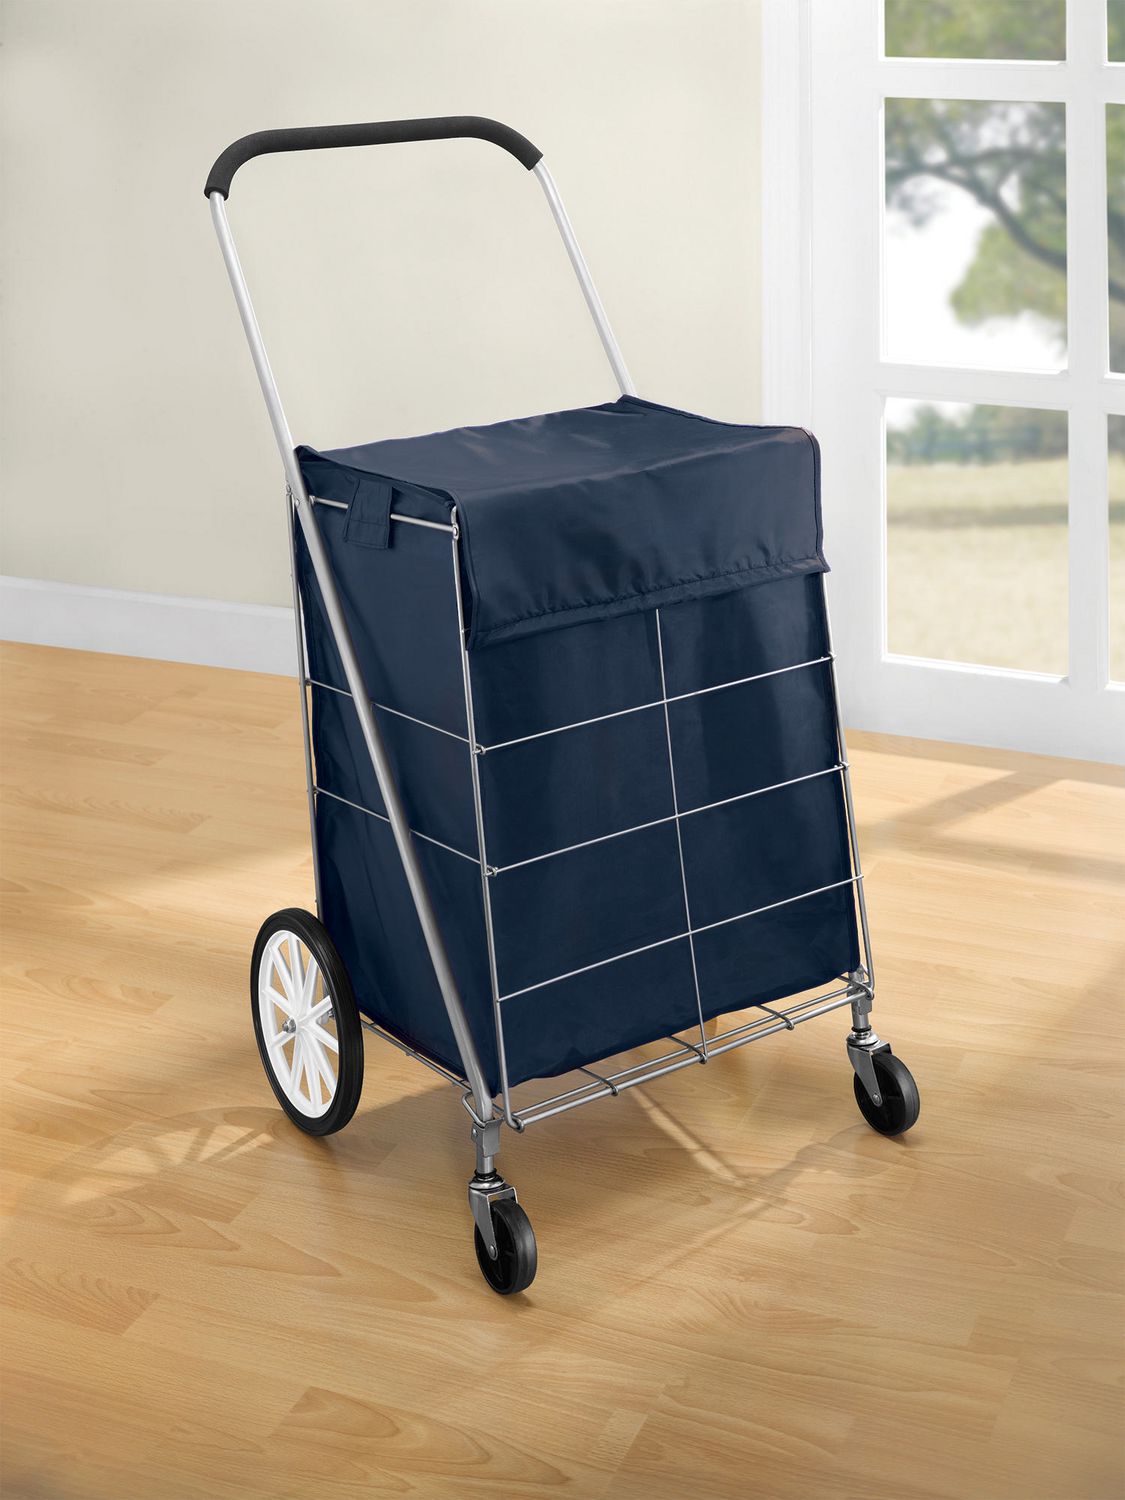 mainstays-4-wheel-shopping-cart-with-bag-walmart-canada